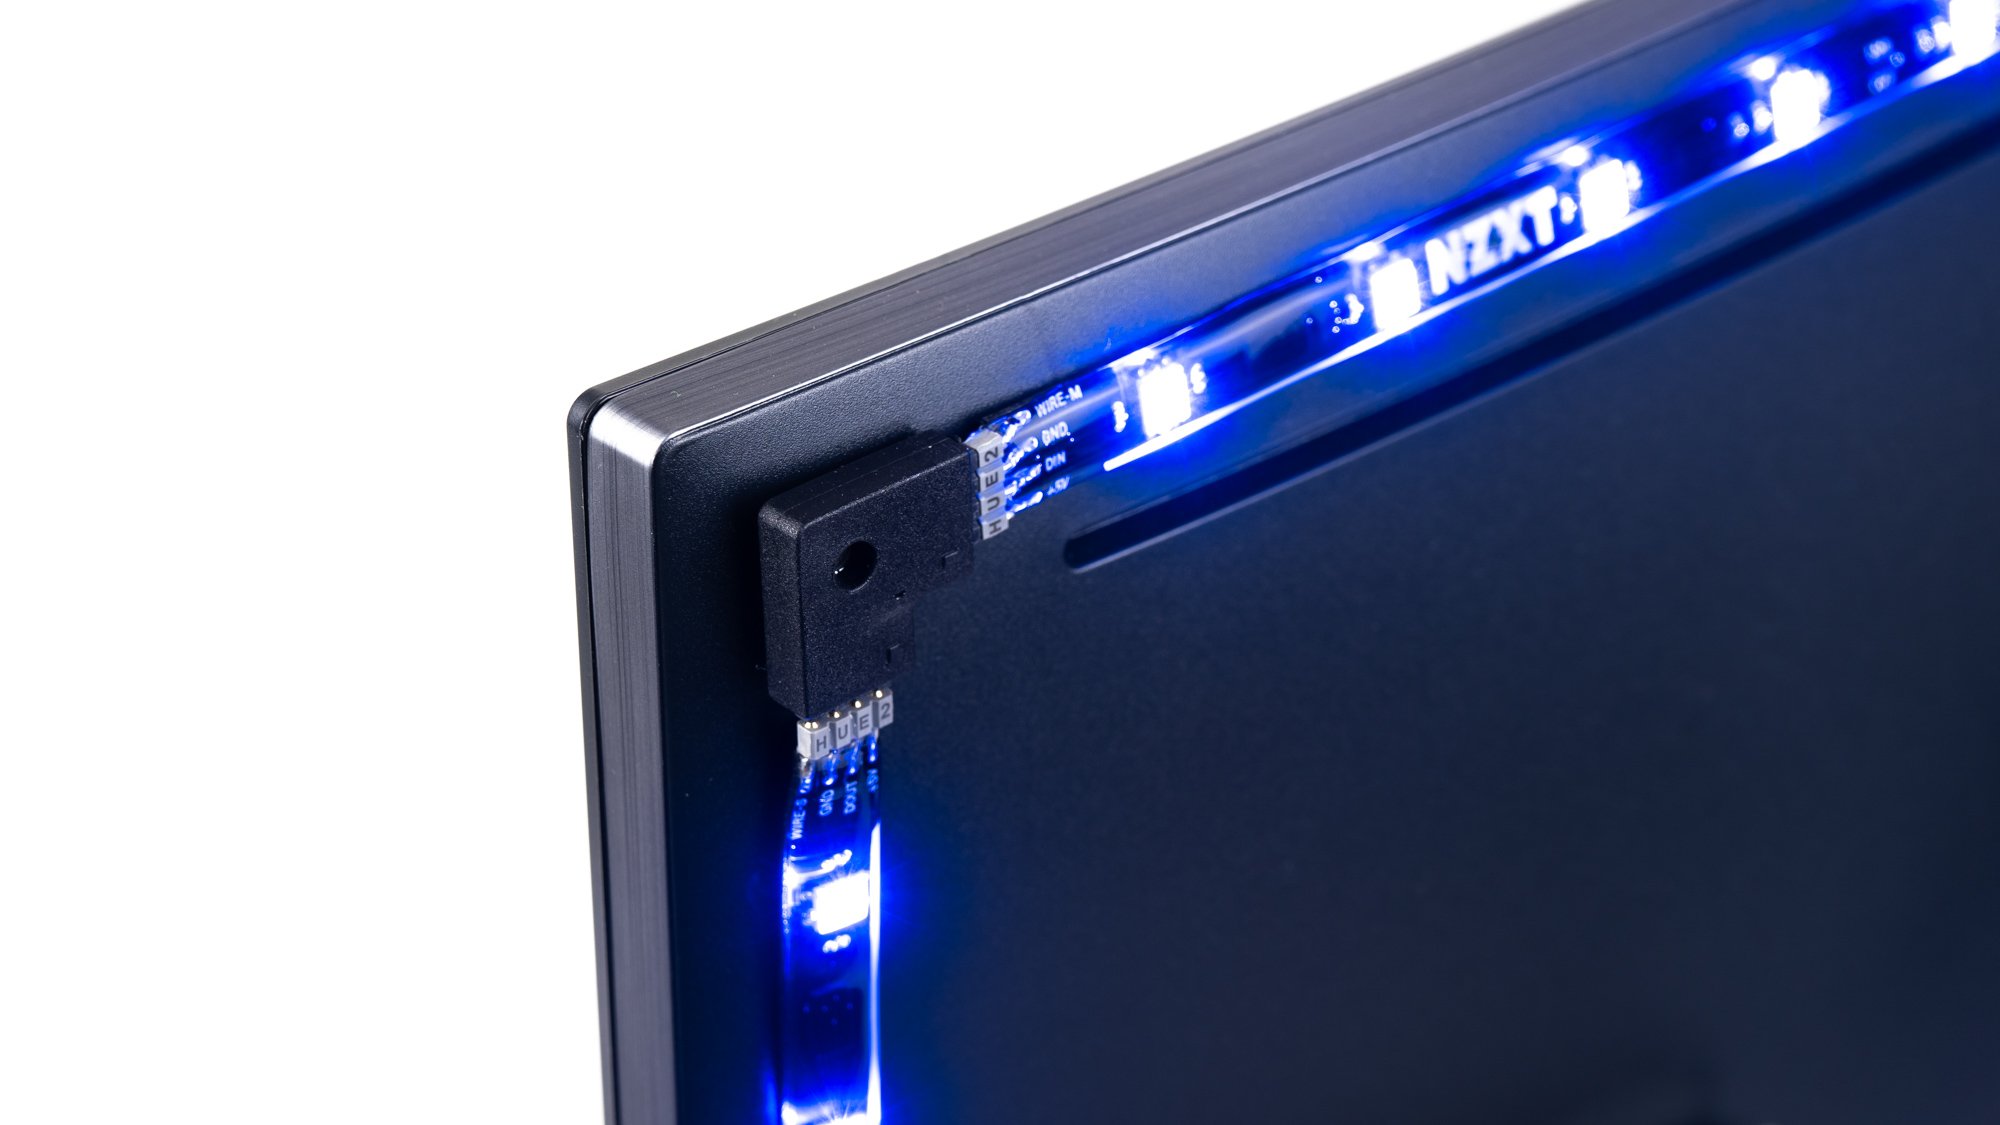 NZXT-Hue2-RGB-LED-Monitor-Lighting-2